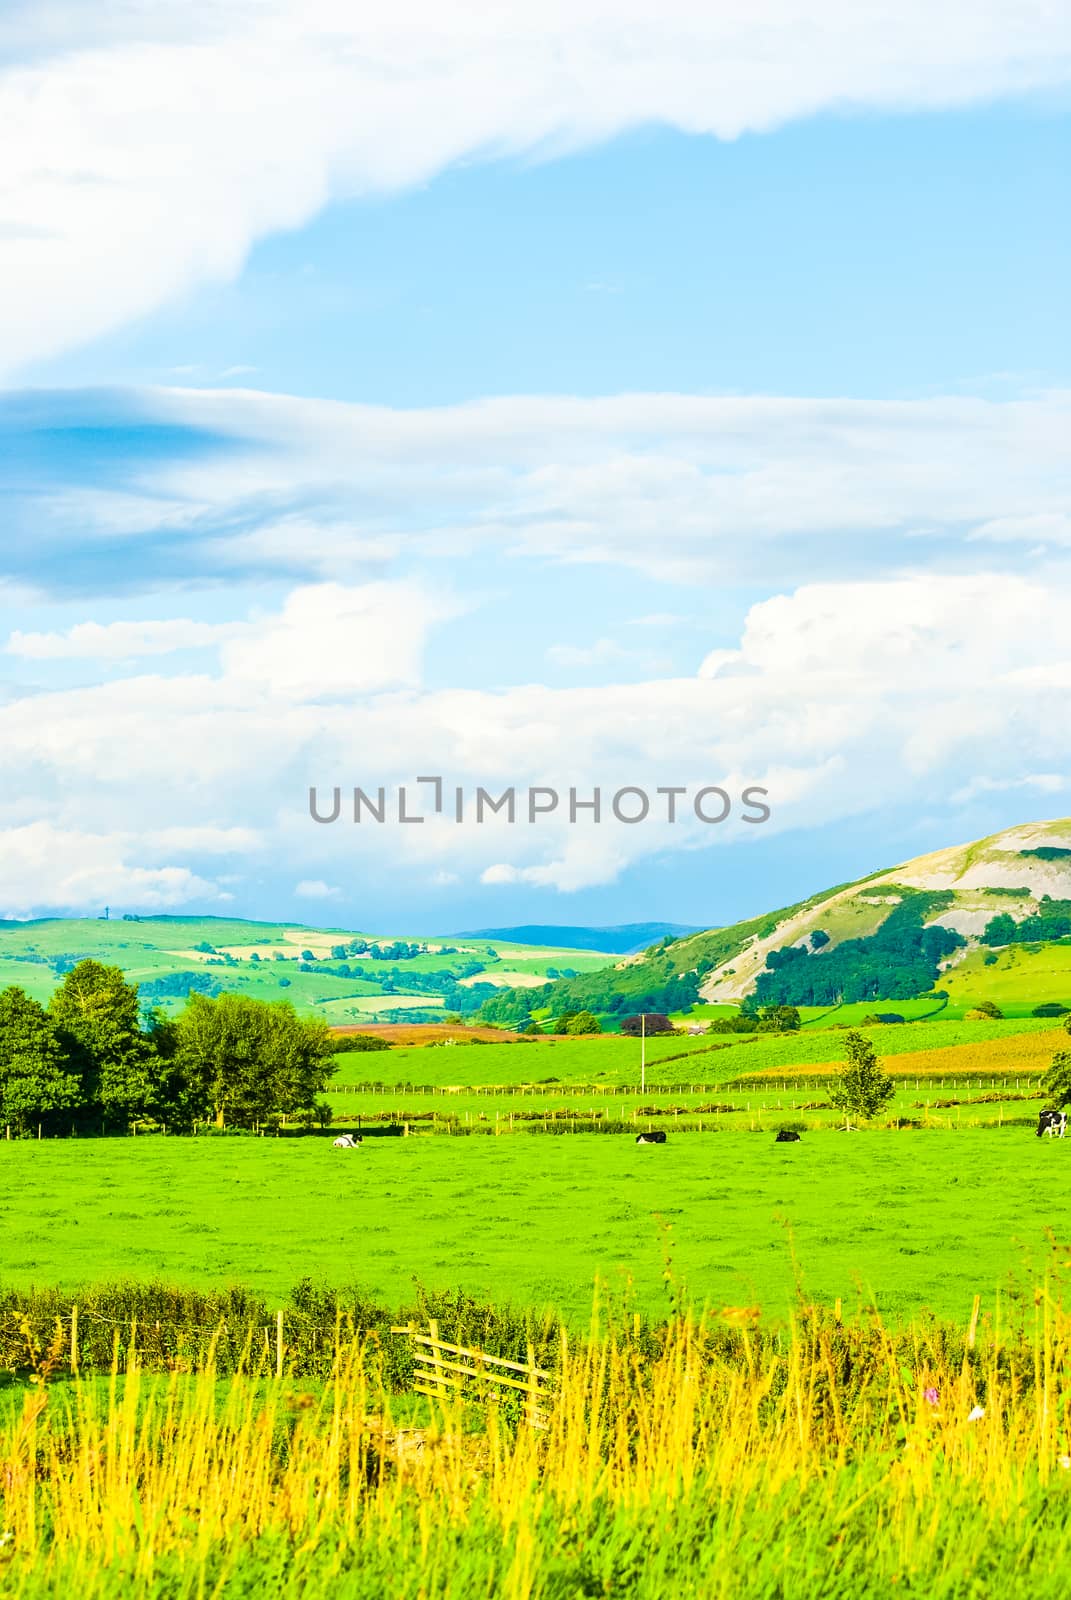 open grassland and sky farm field scenery scenic Outdoor landscape UK